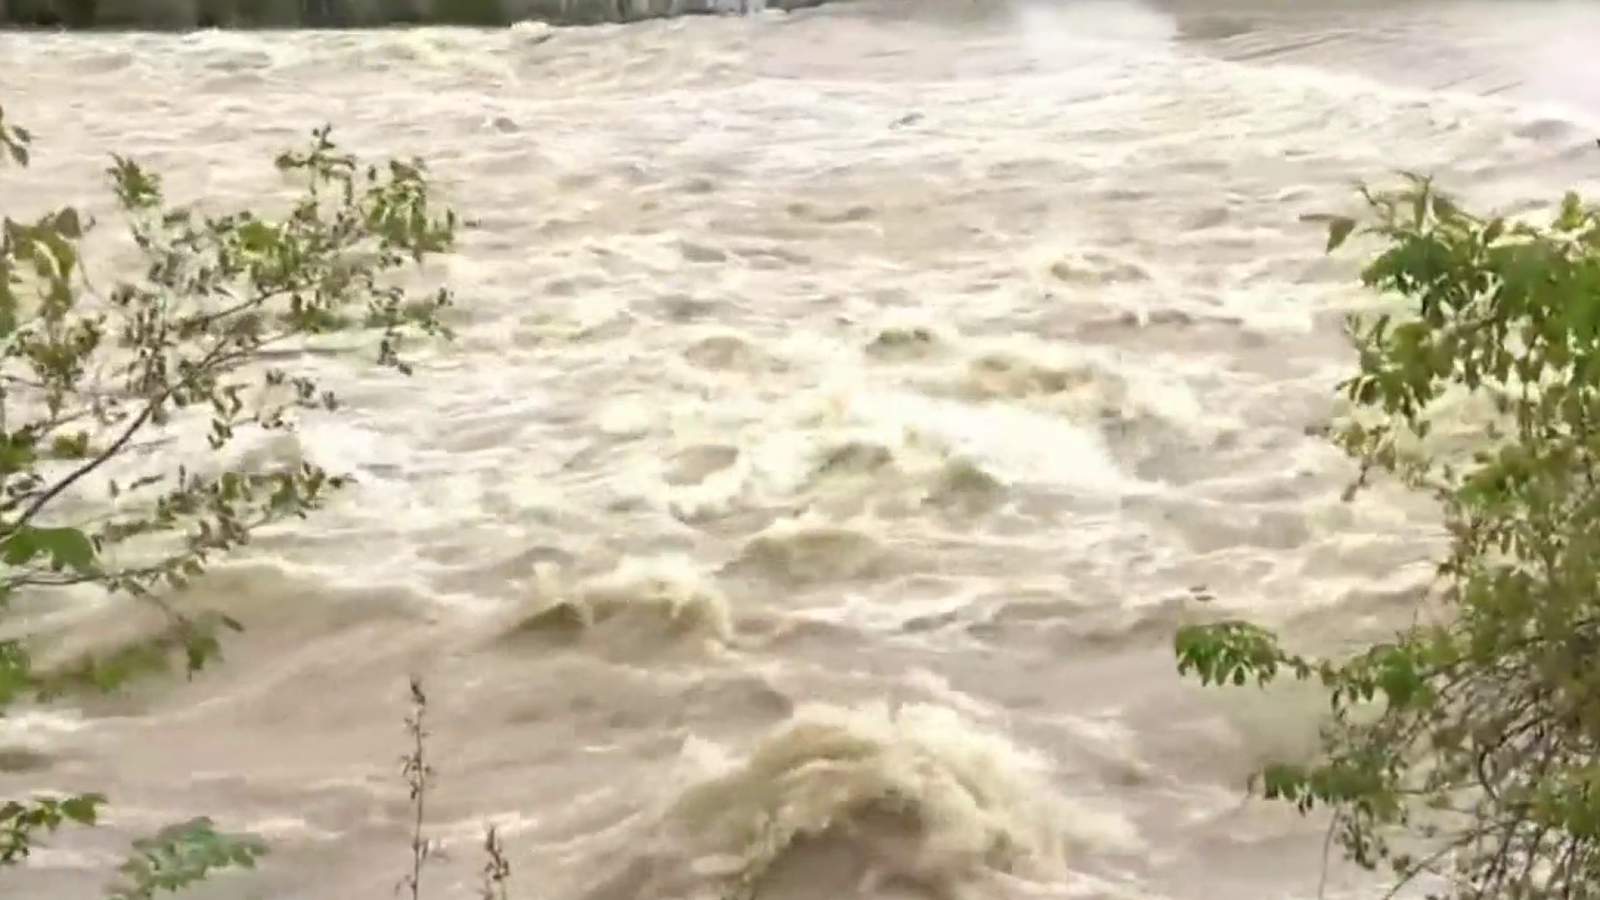 Monroe facing flooding as River Raisin overflows